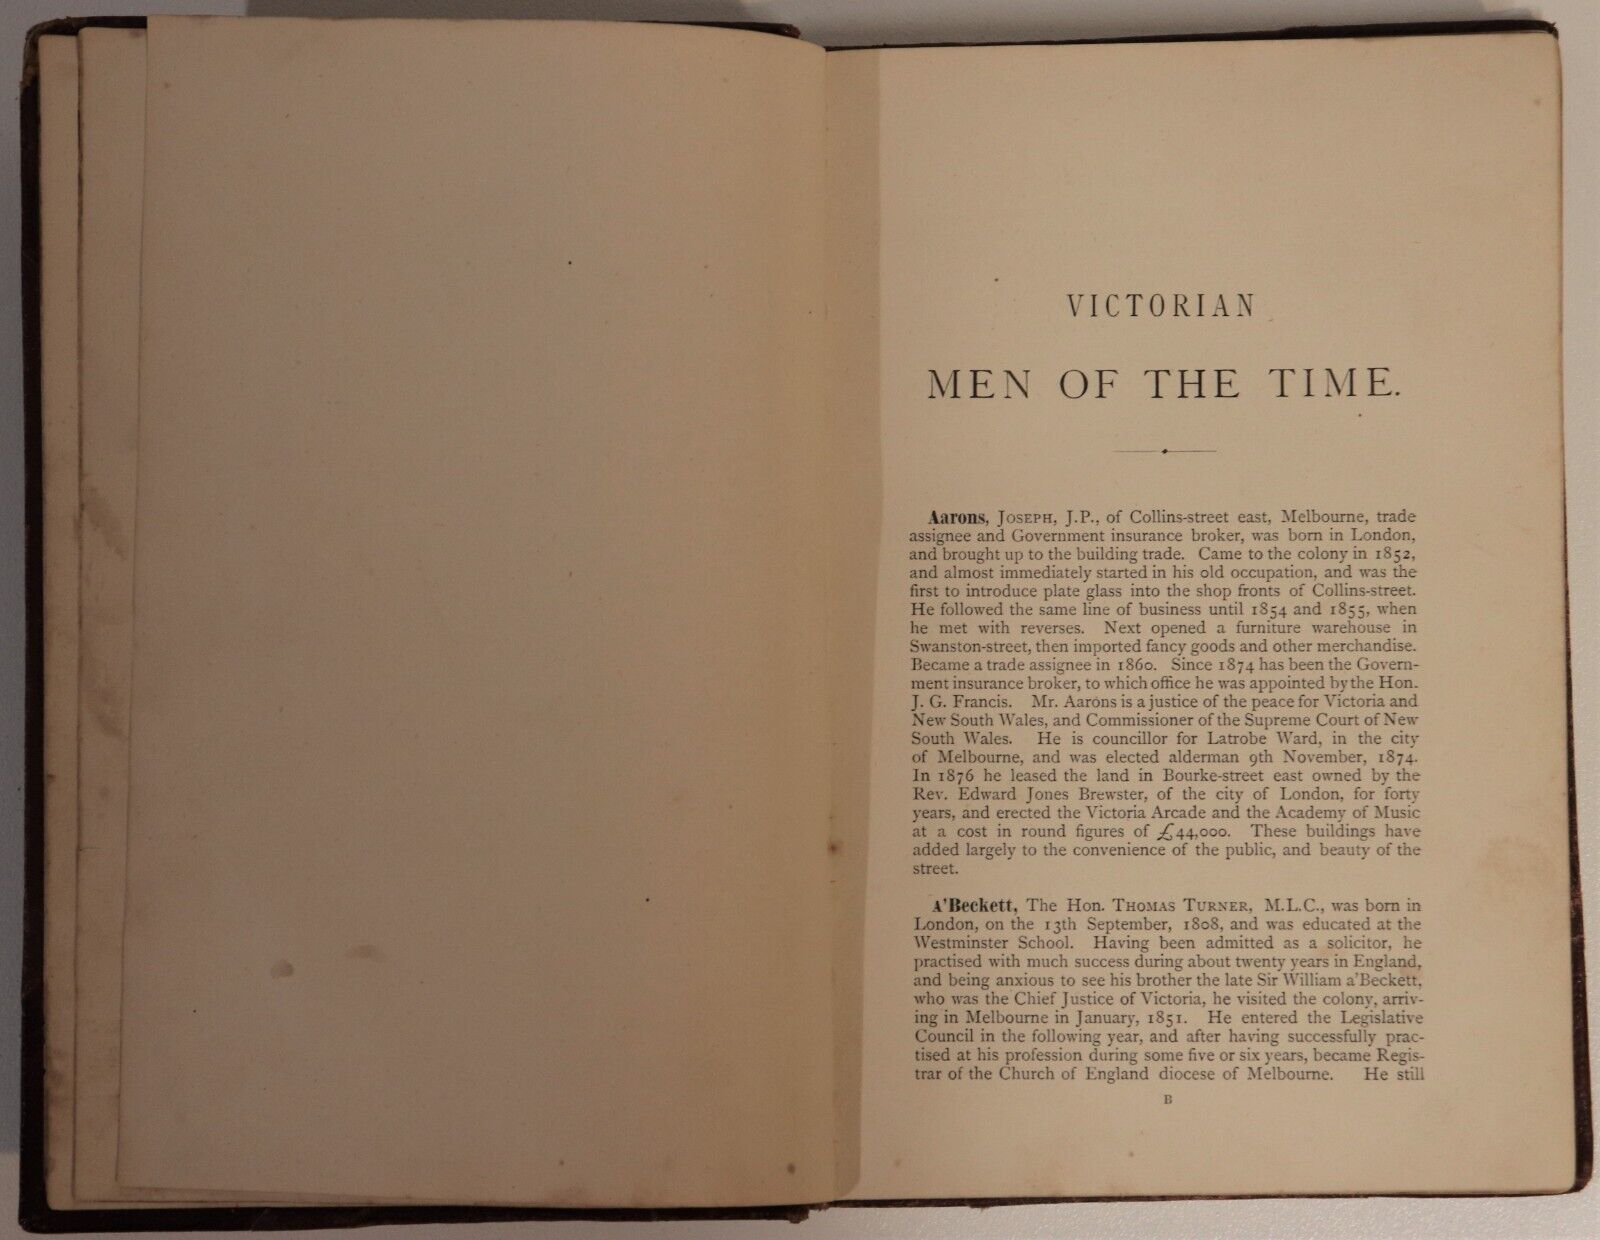 1878 Men Of The Time In Australia: Victoria Antiquarian Australian History Book